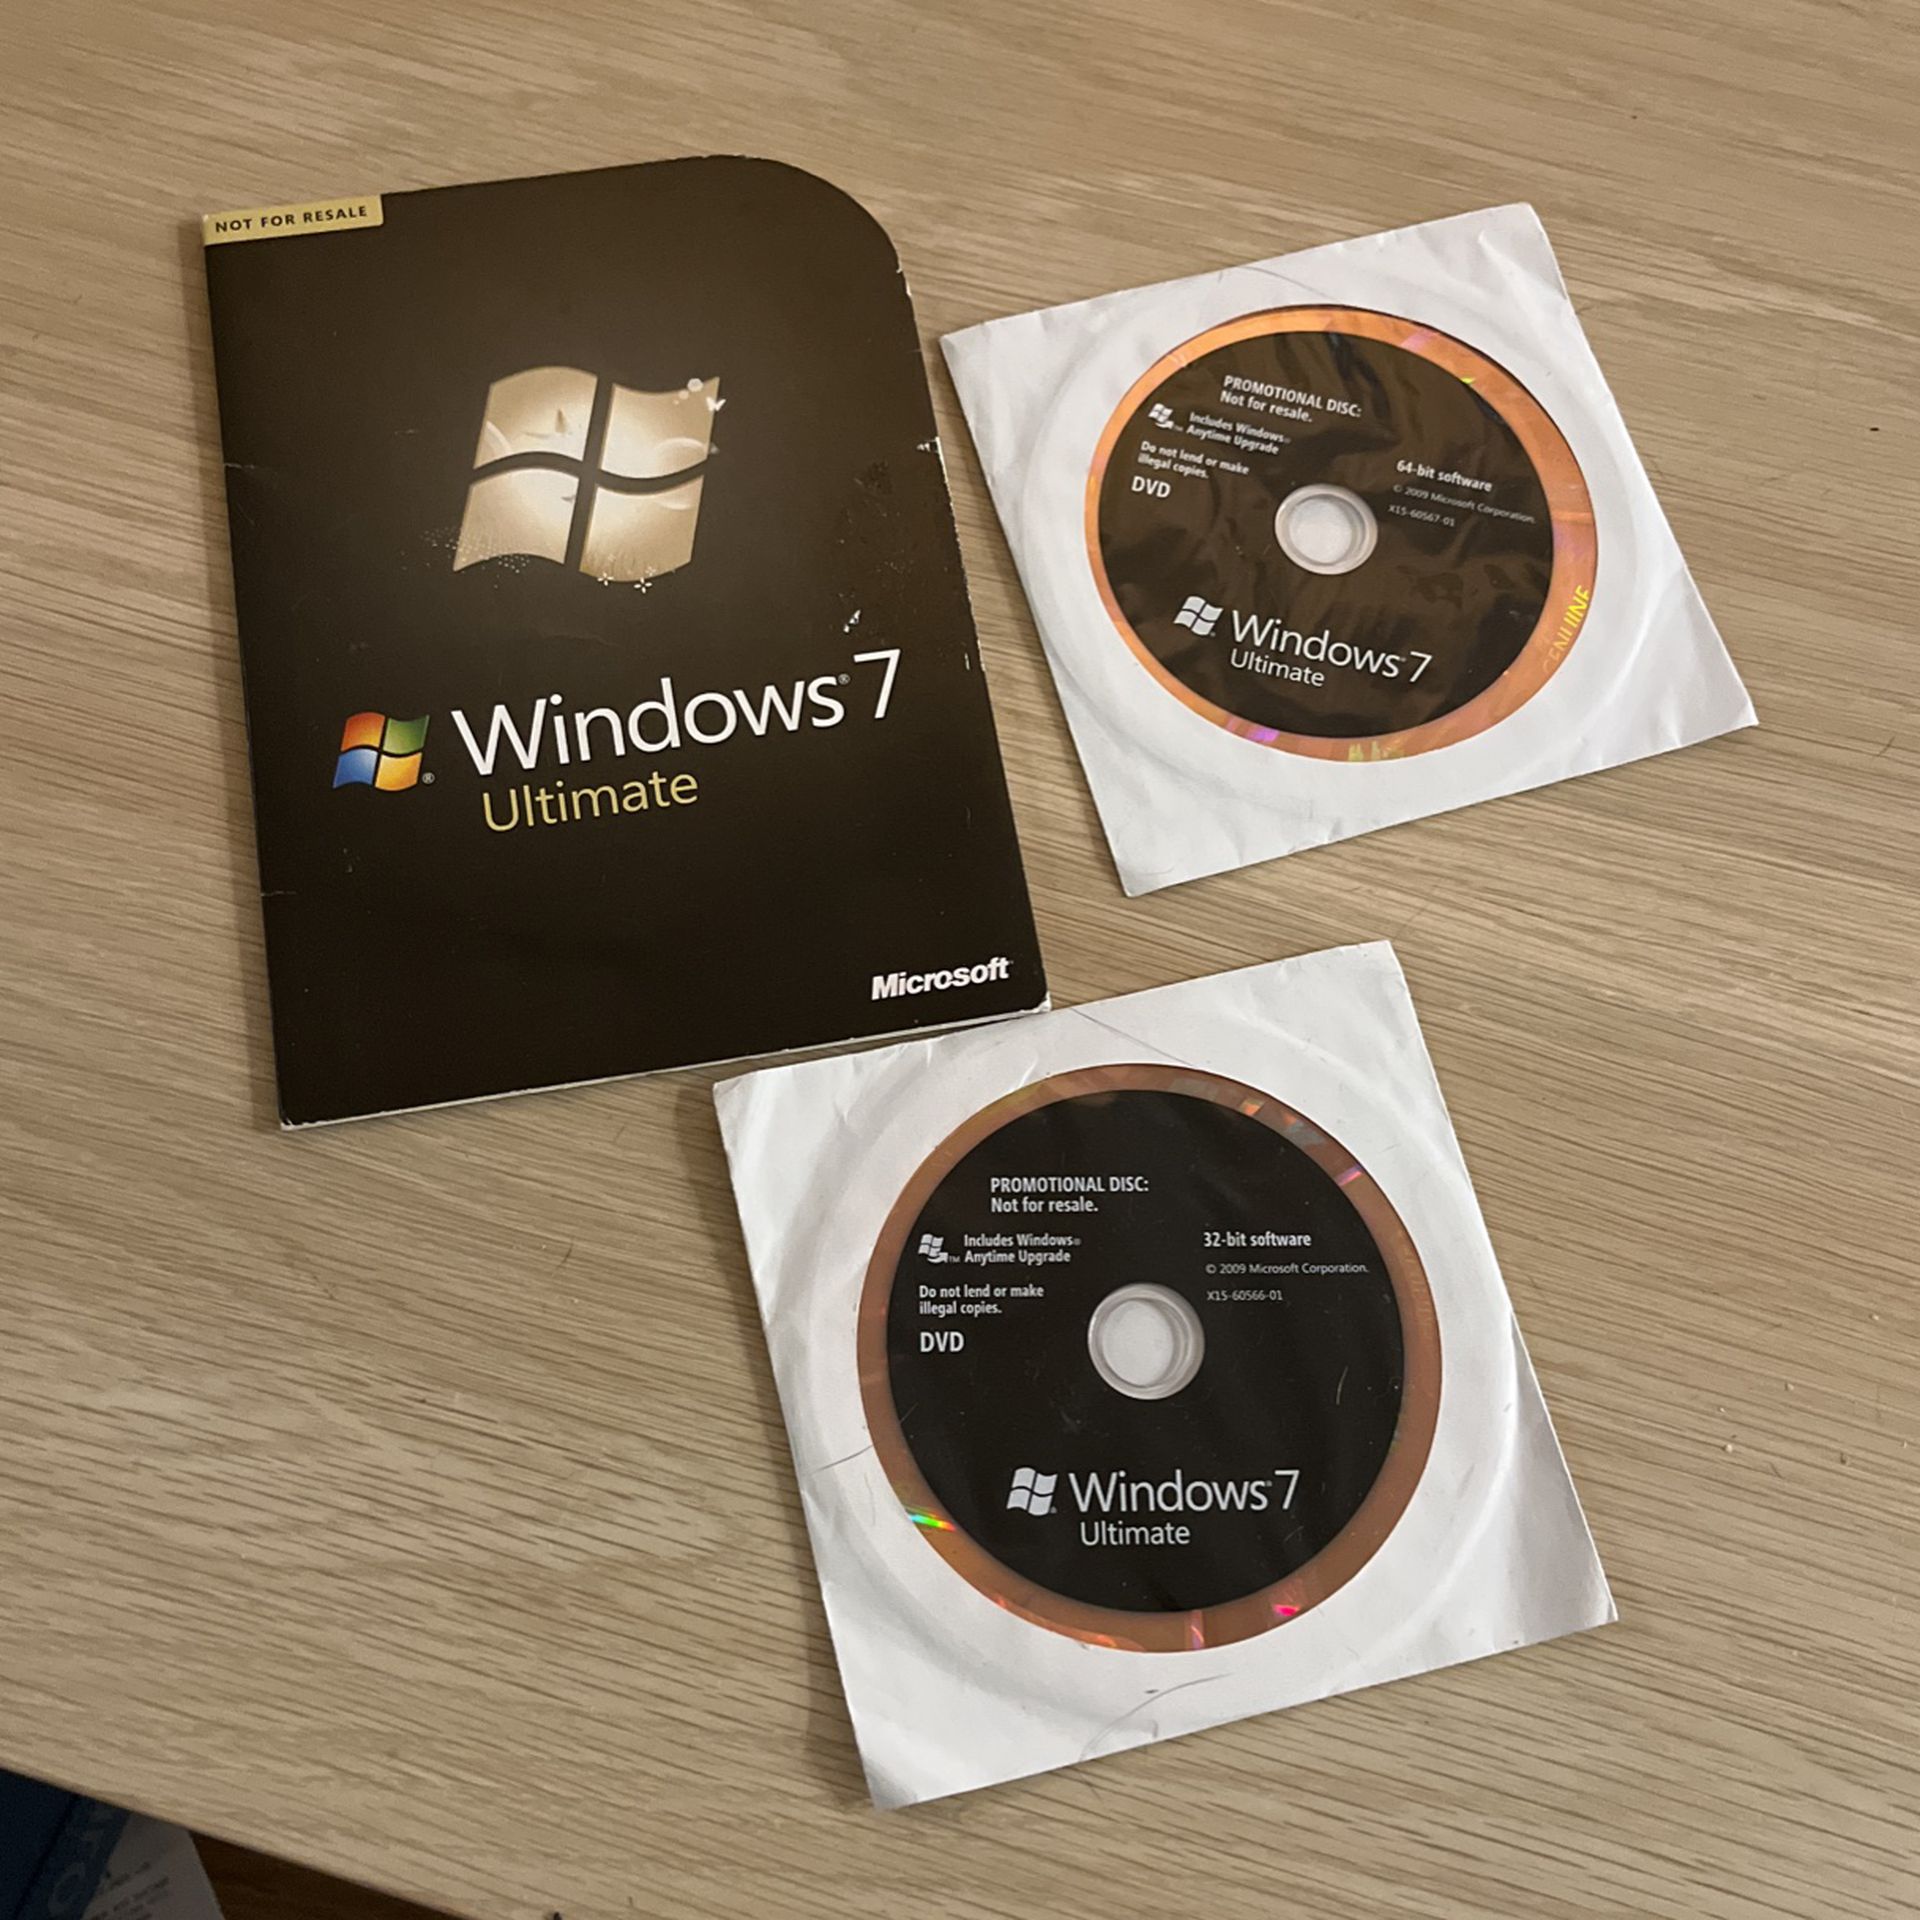 Windows 7 Ultimate CDs